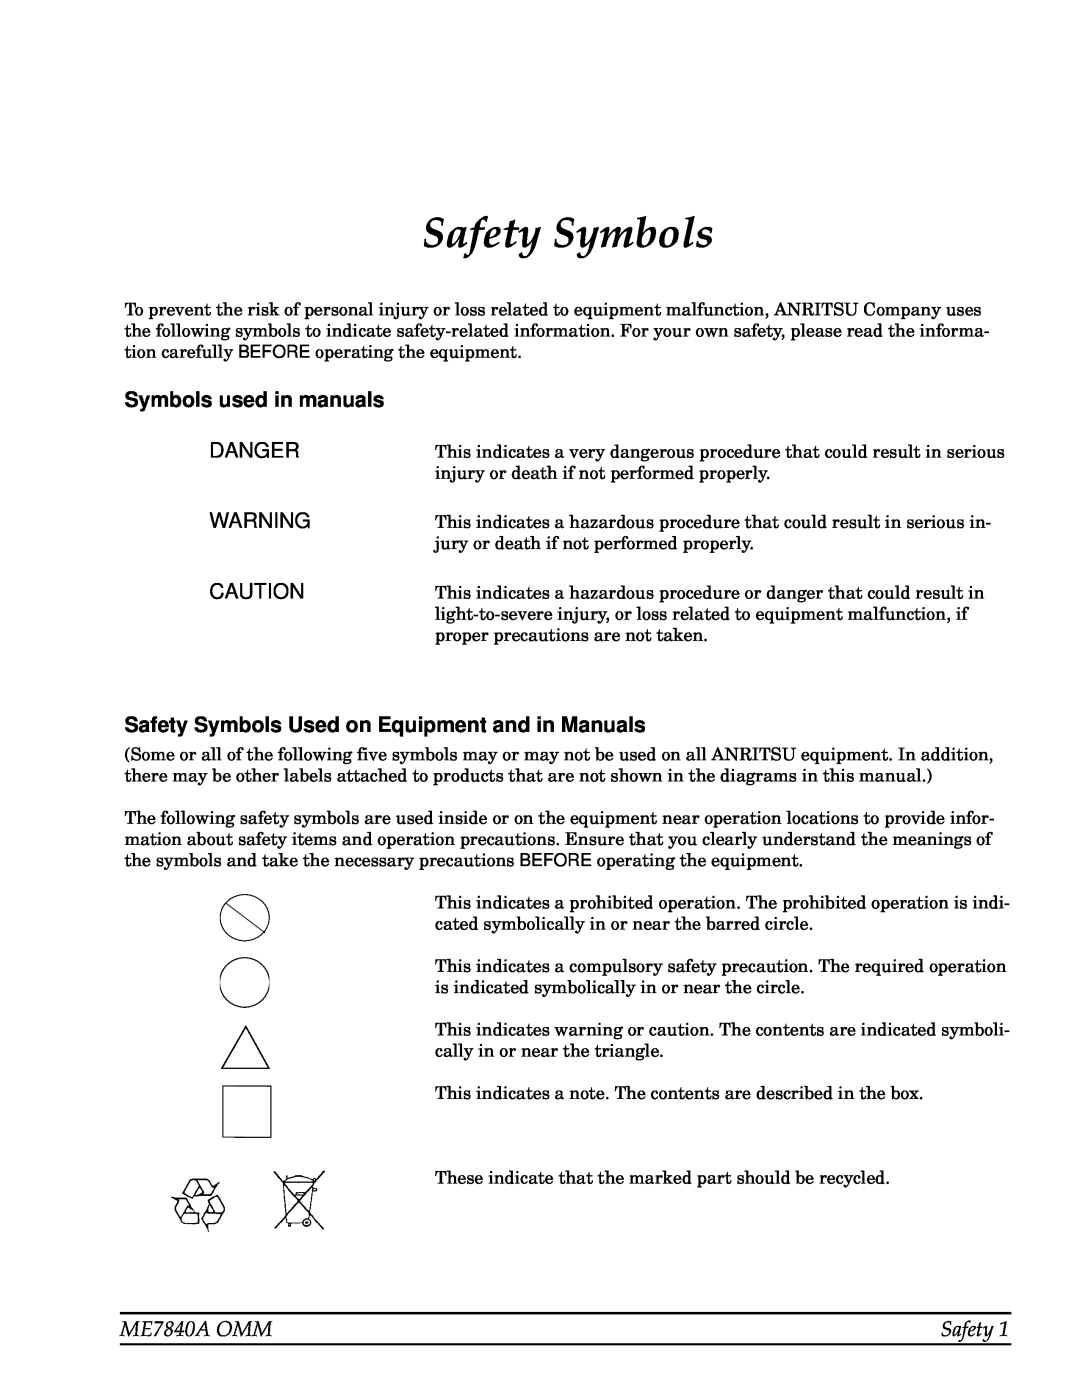 Anritsu Danger, ME7840A OMM, Symbols used in manuals, Safety Symbols Used on Equipment and in Manuals 